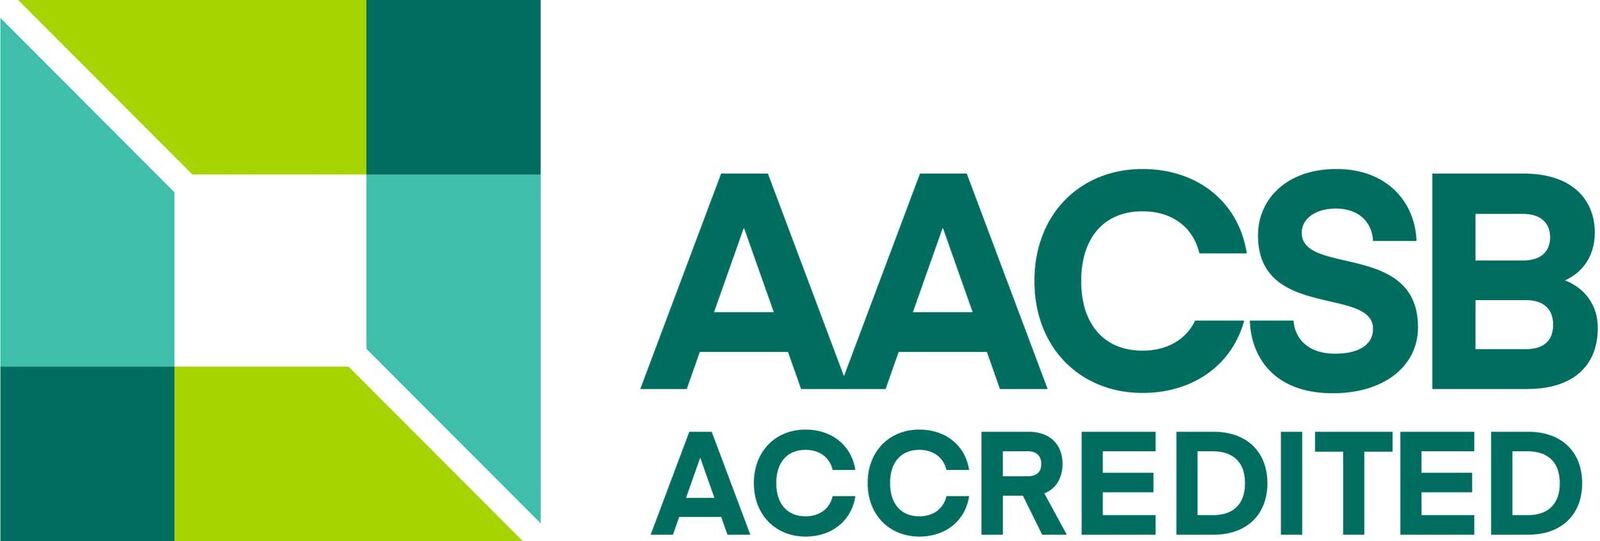 AACSB logo.png